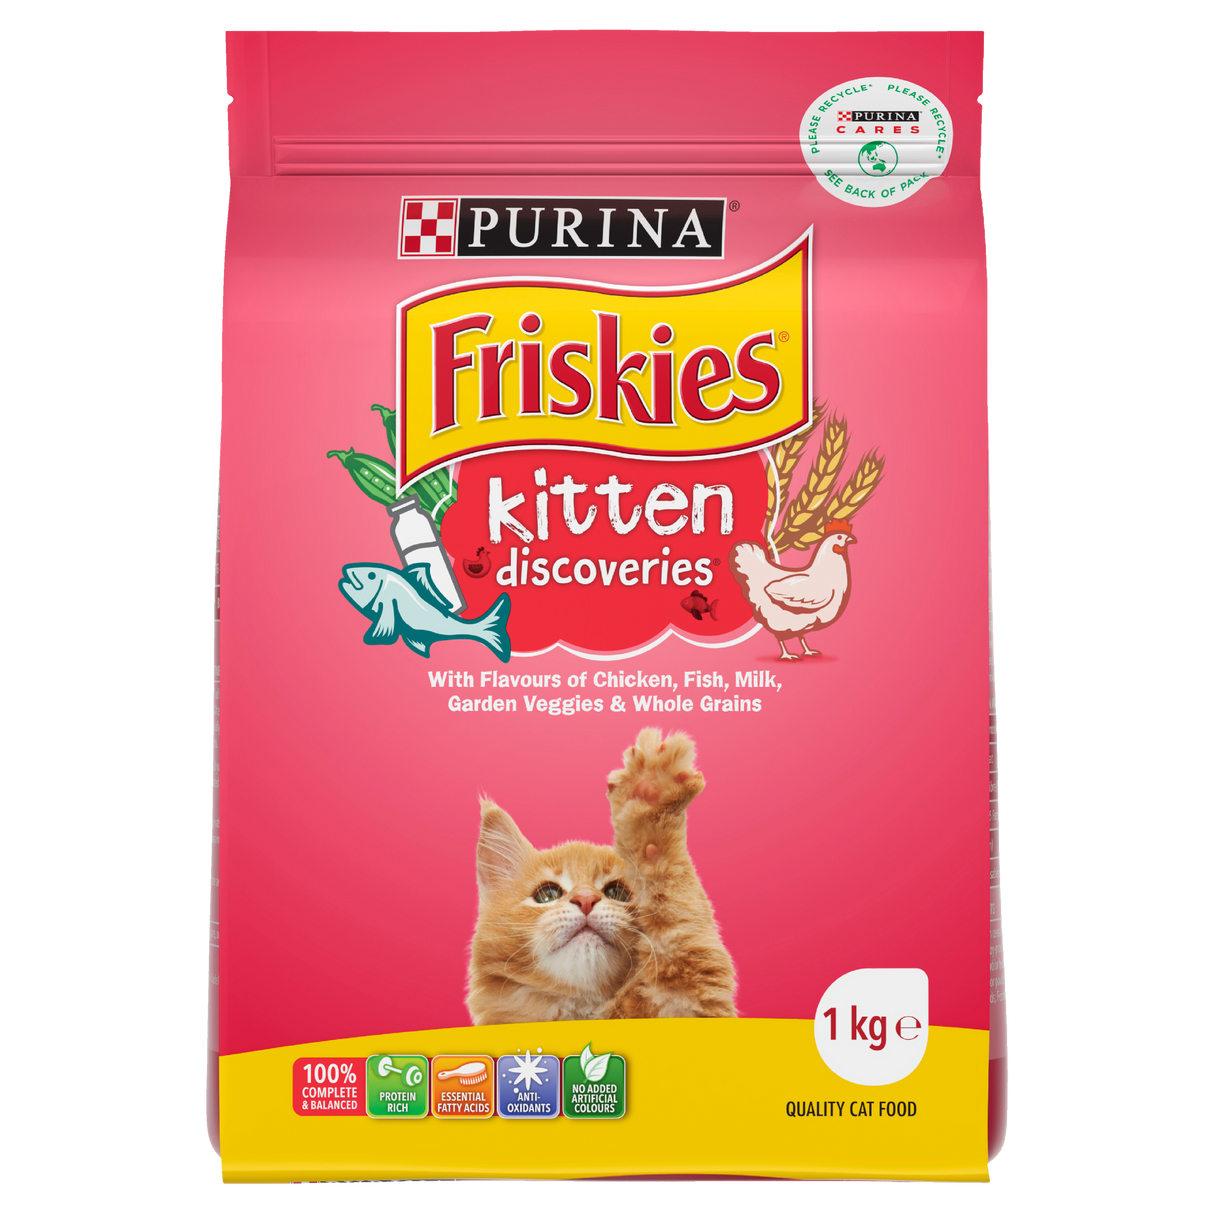 Purina Friskies Kitten Discoveries Dry Cat Food 1kg